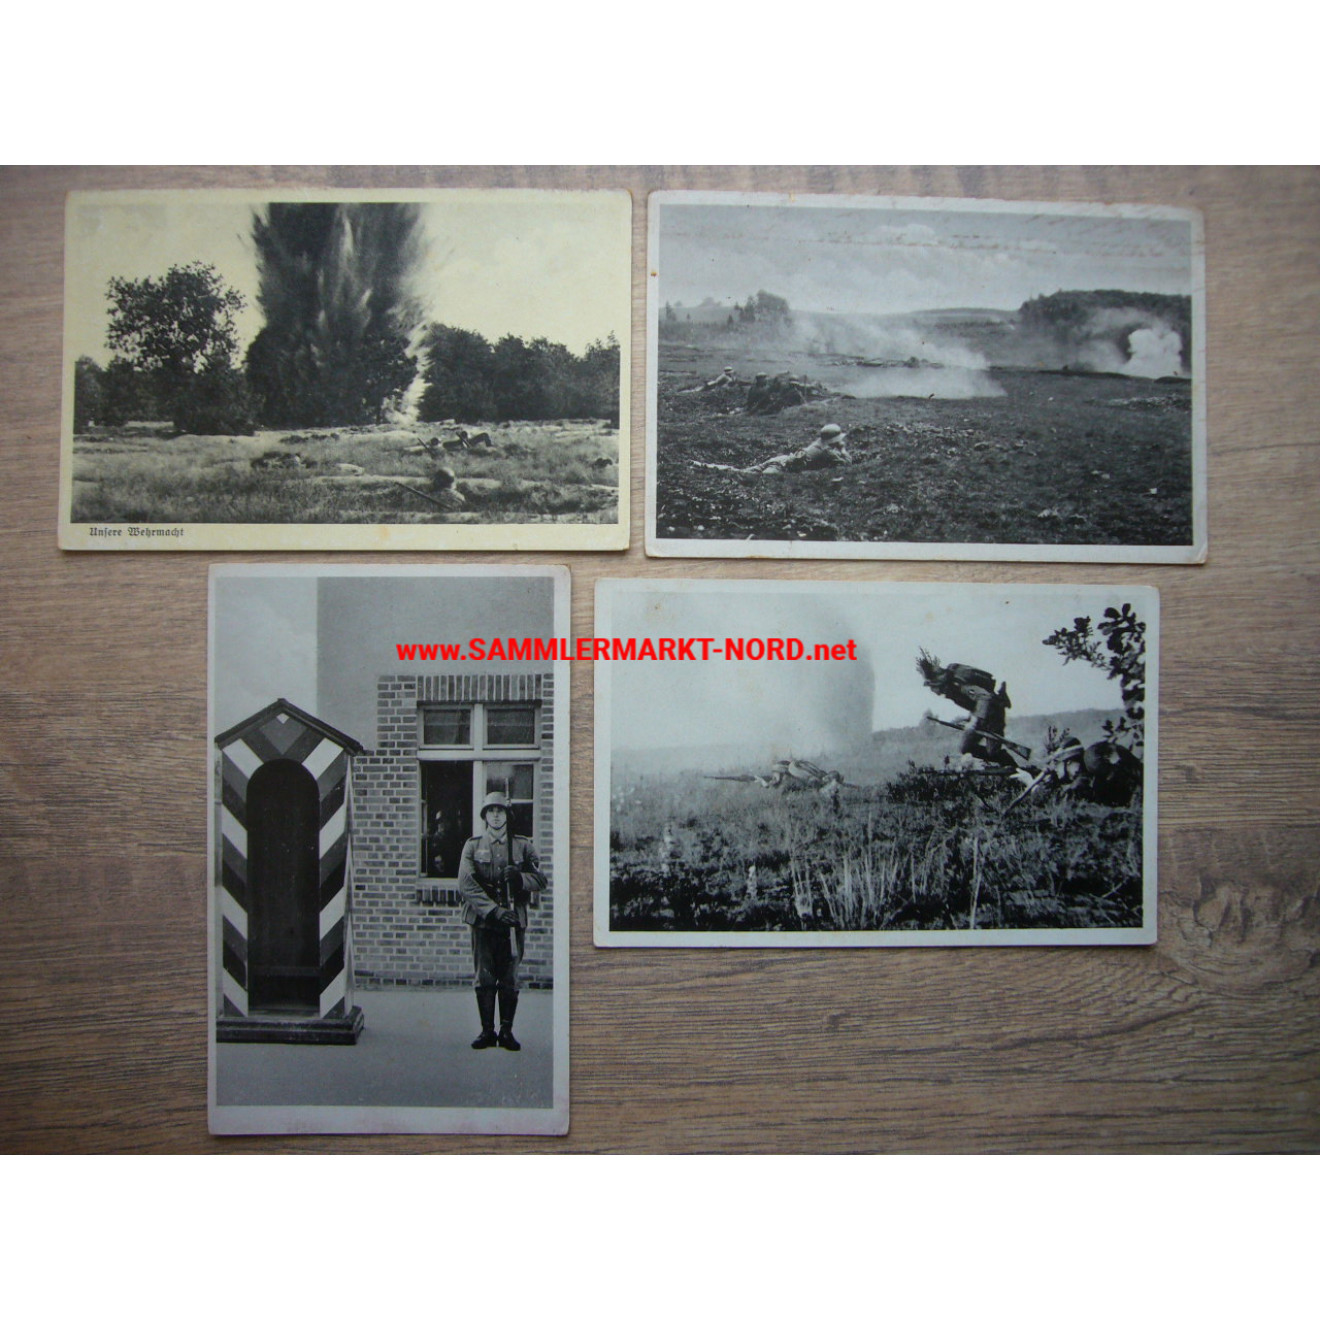 4 x postcard series "Our Wehrmacht"